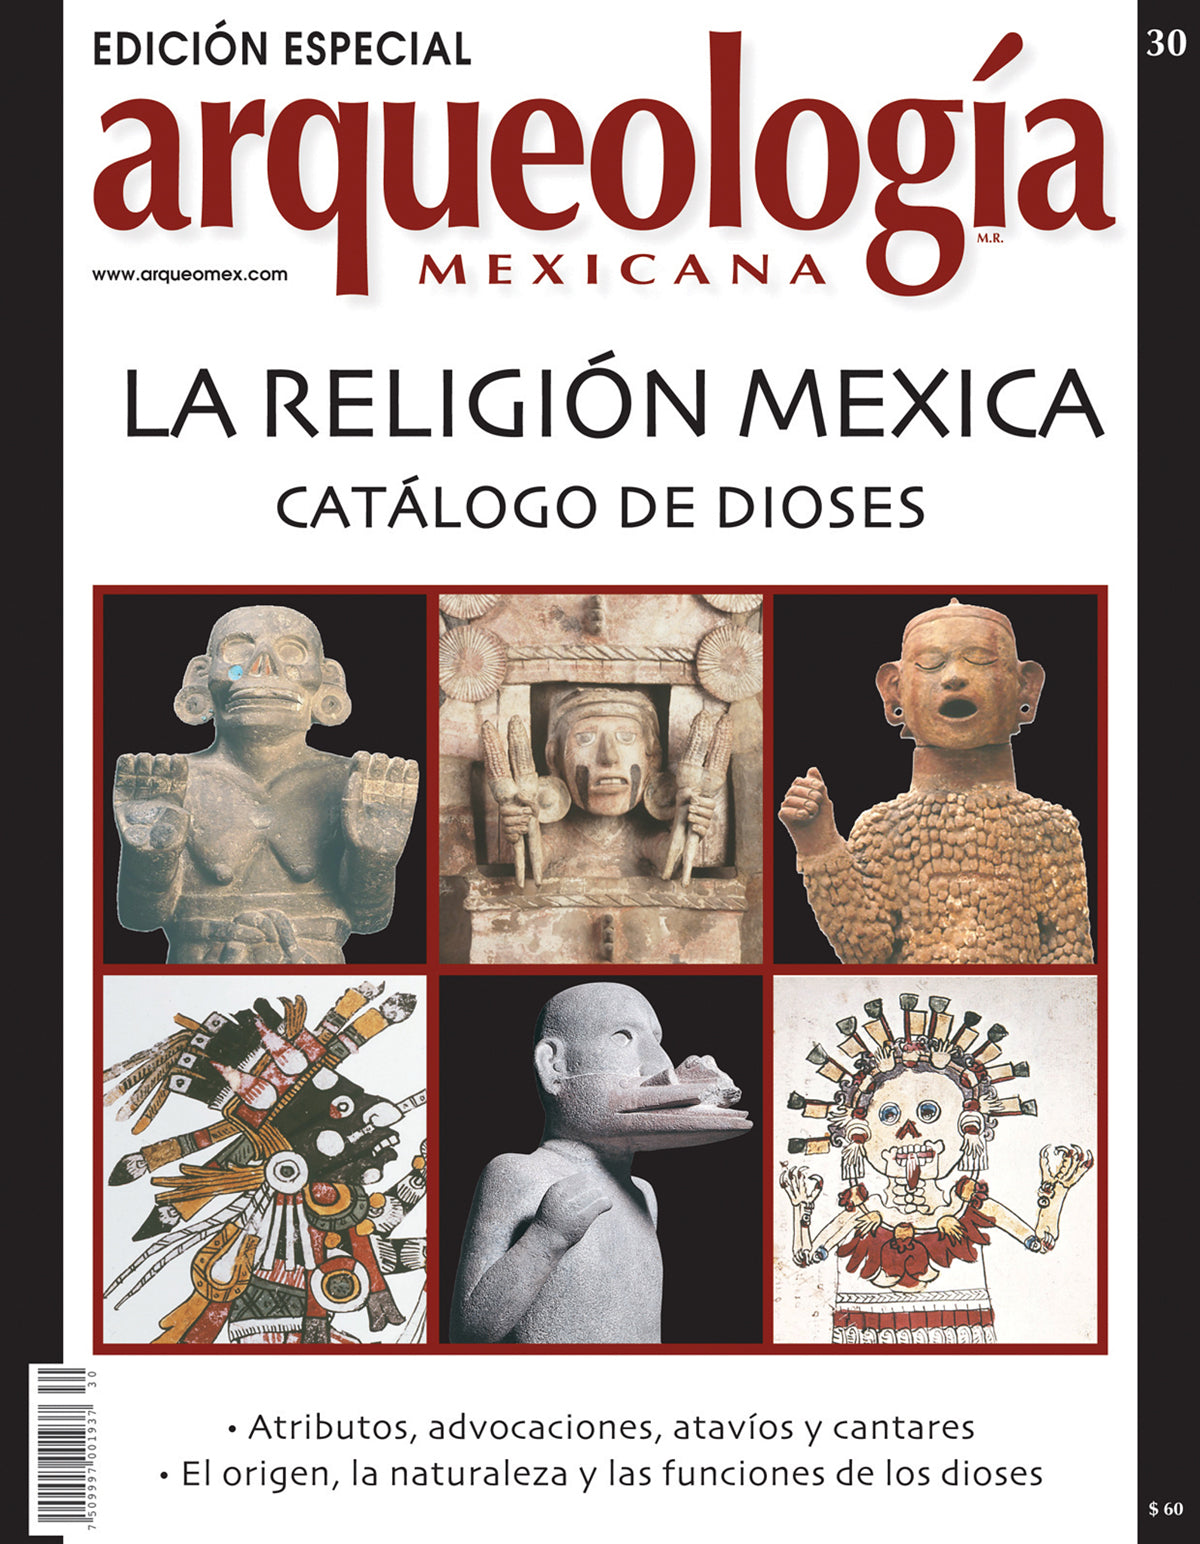 La religión mexica. Catálogo de dioses